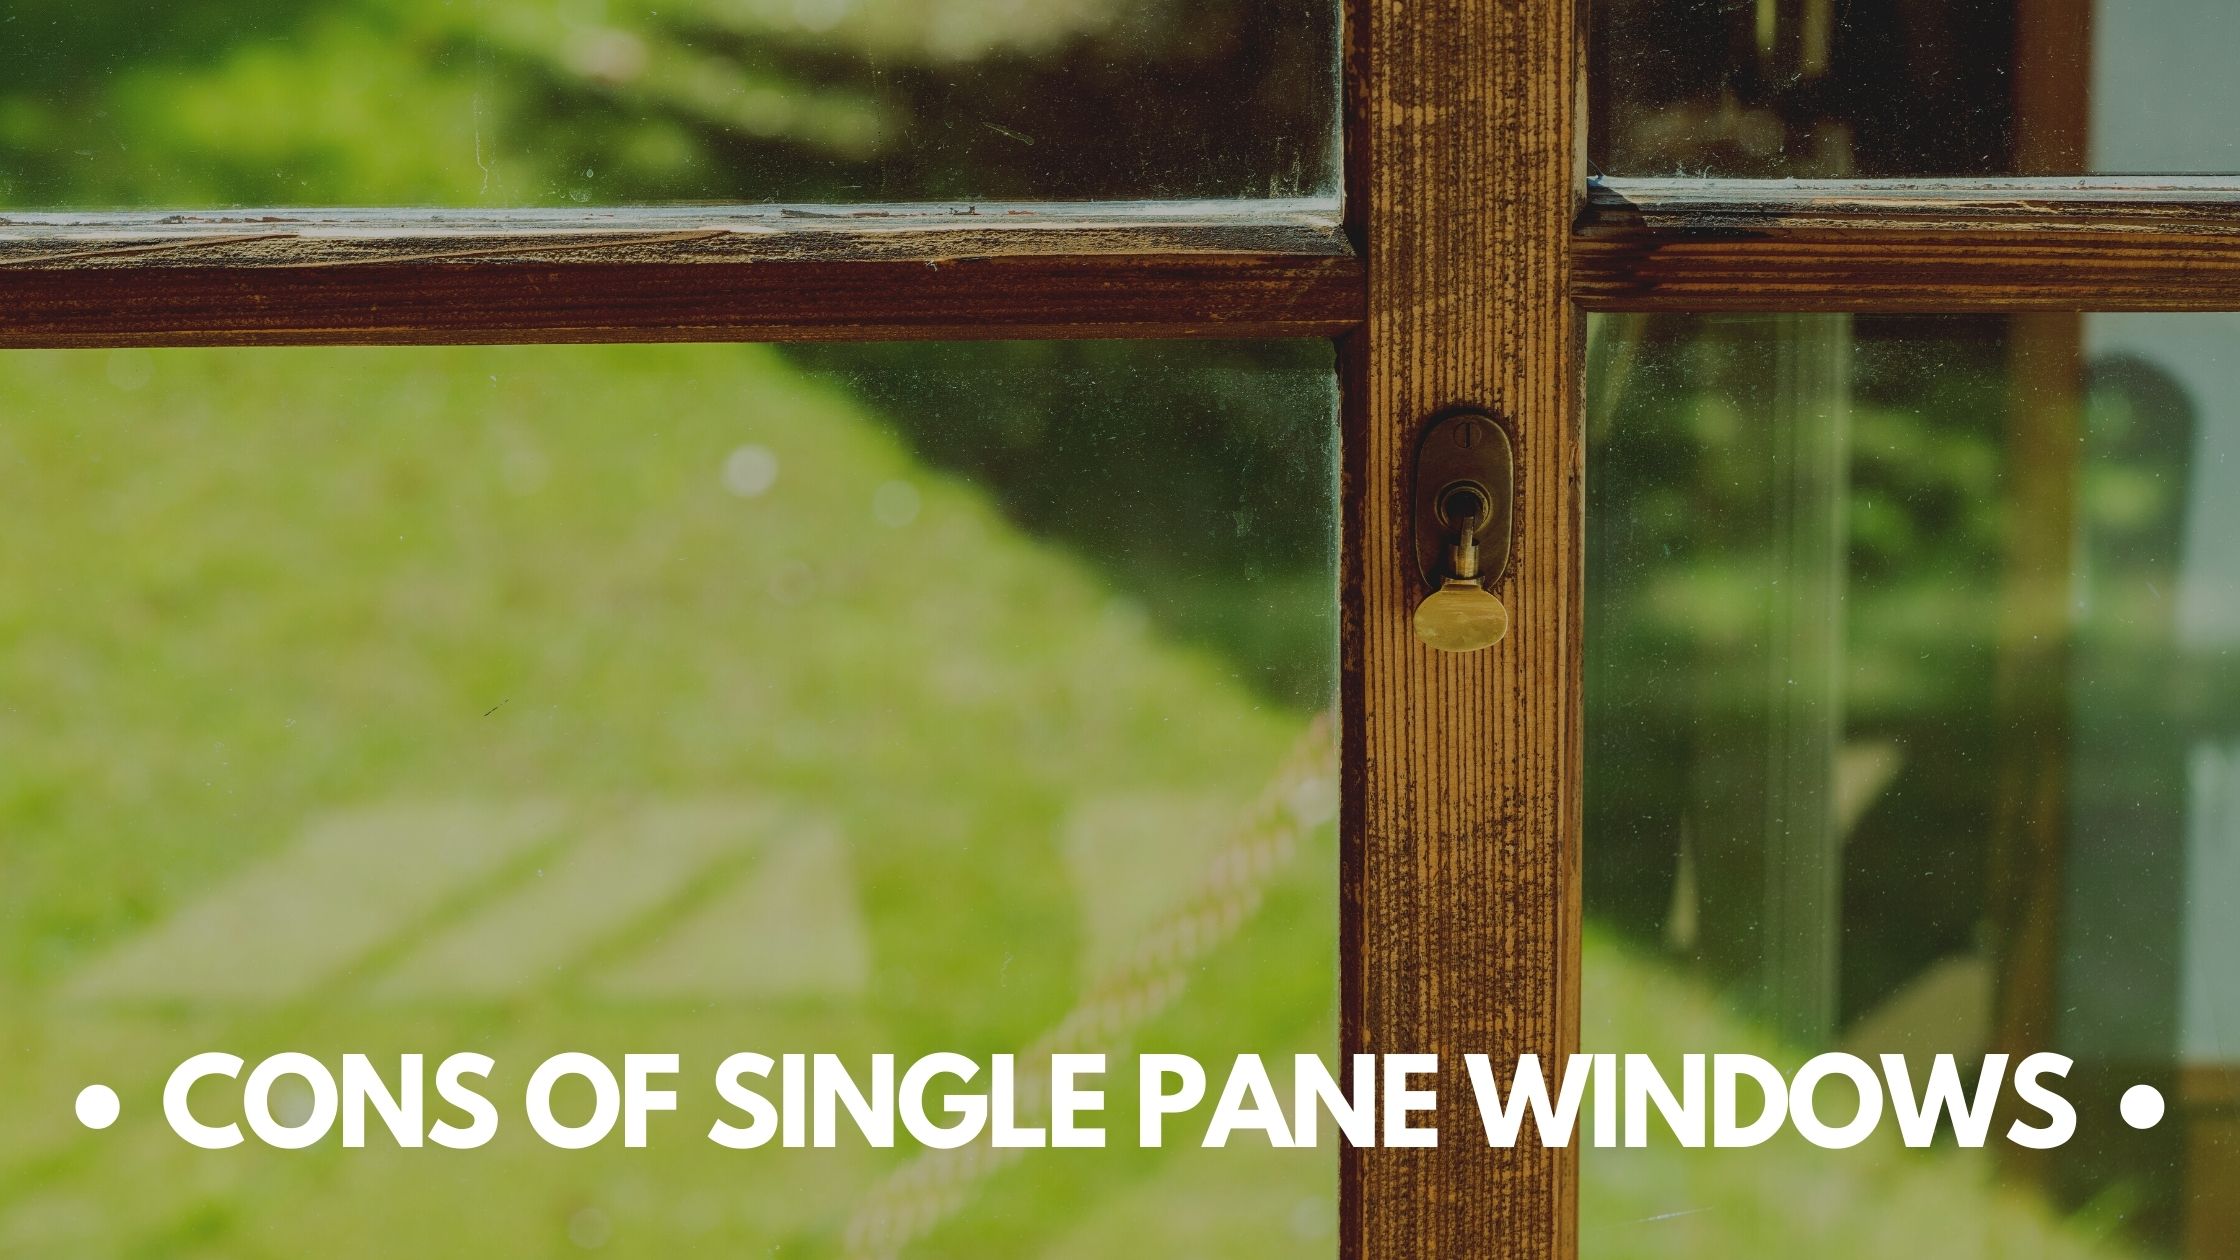 Cons of Single Pane Windows